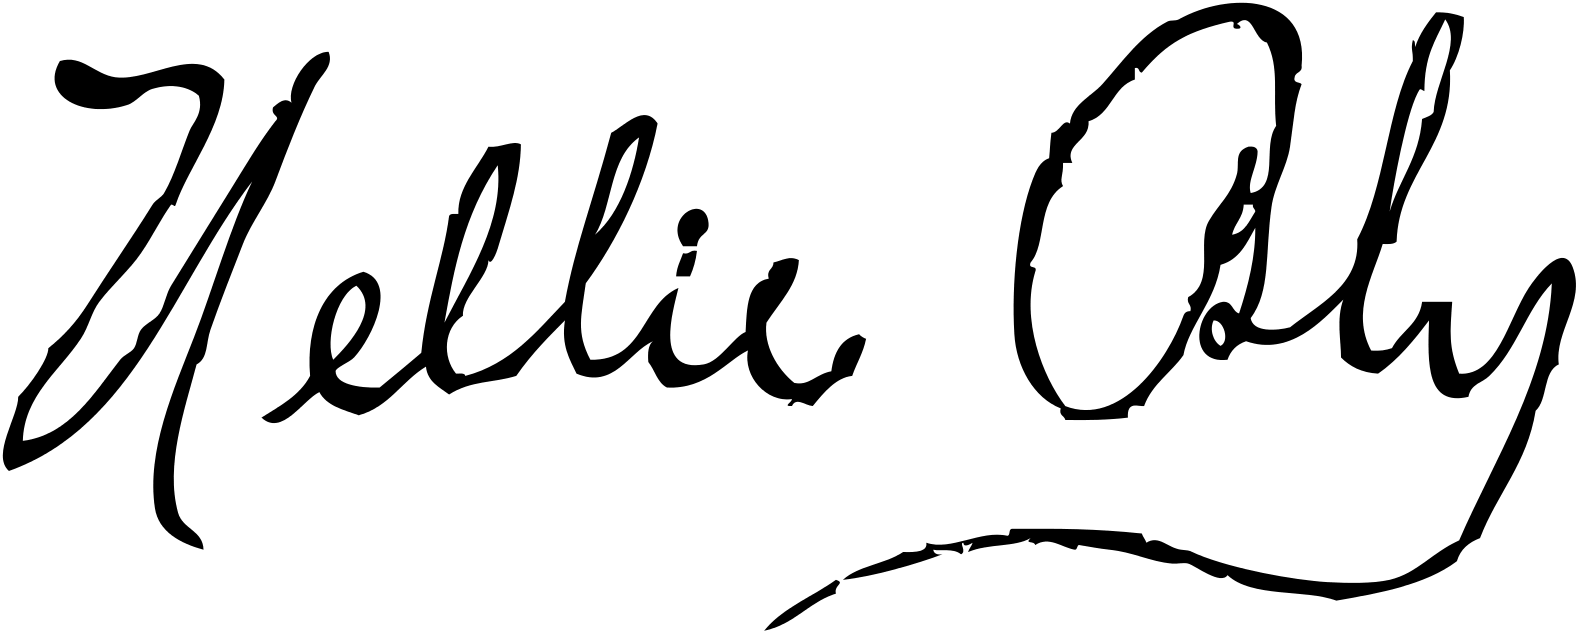 Firma de Nellie Bly